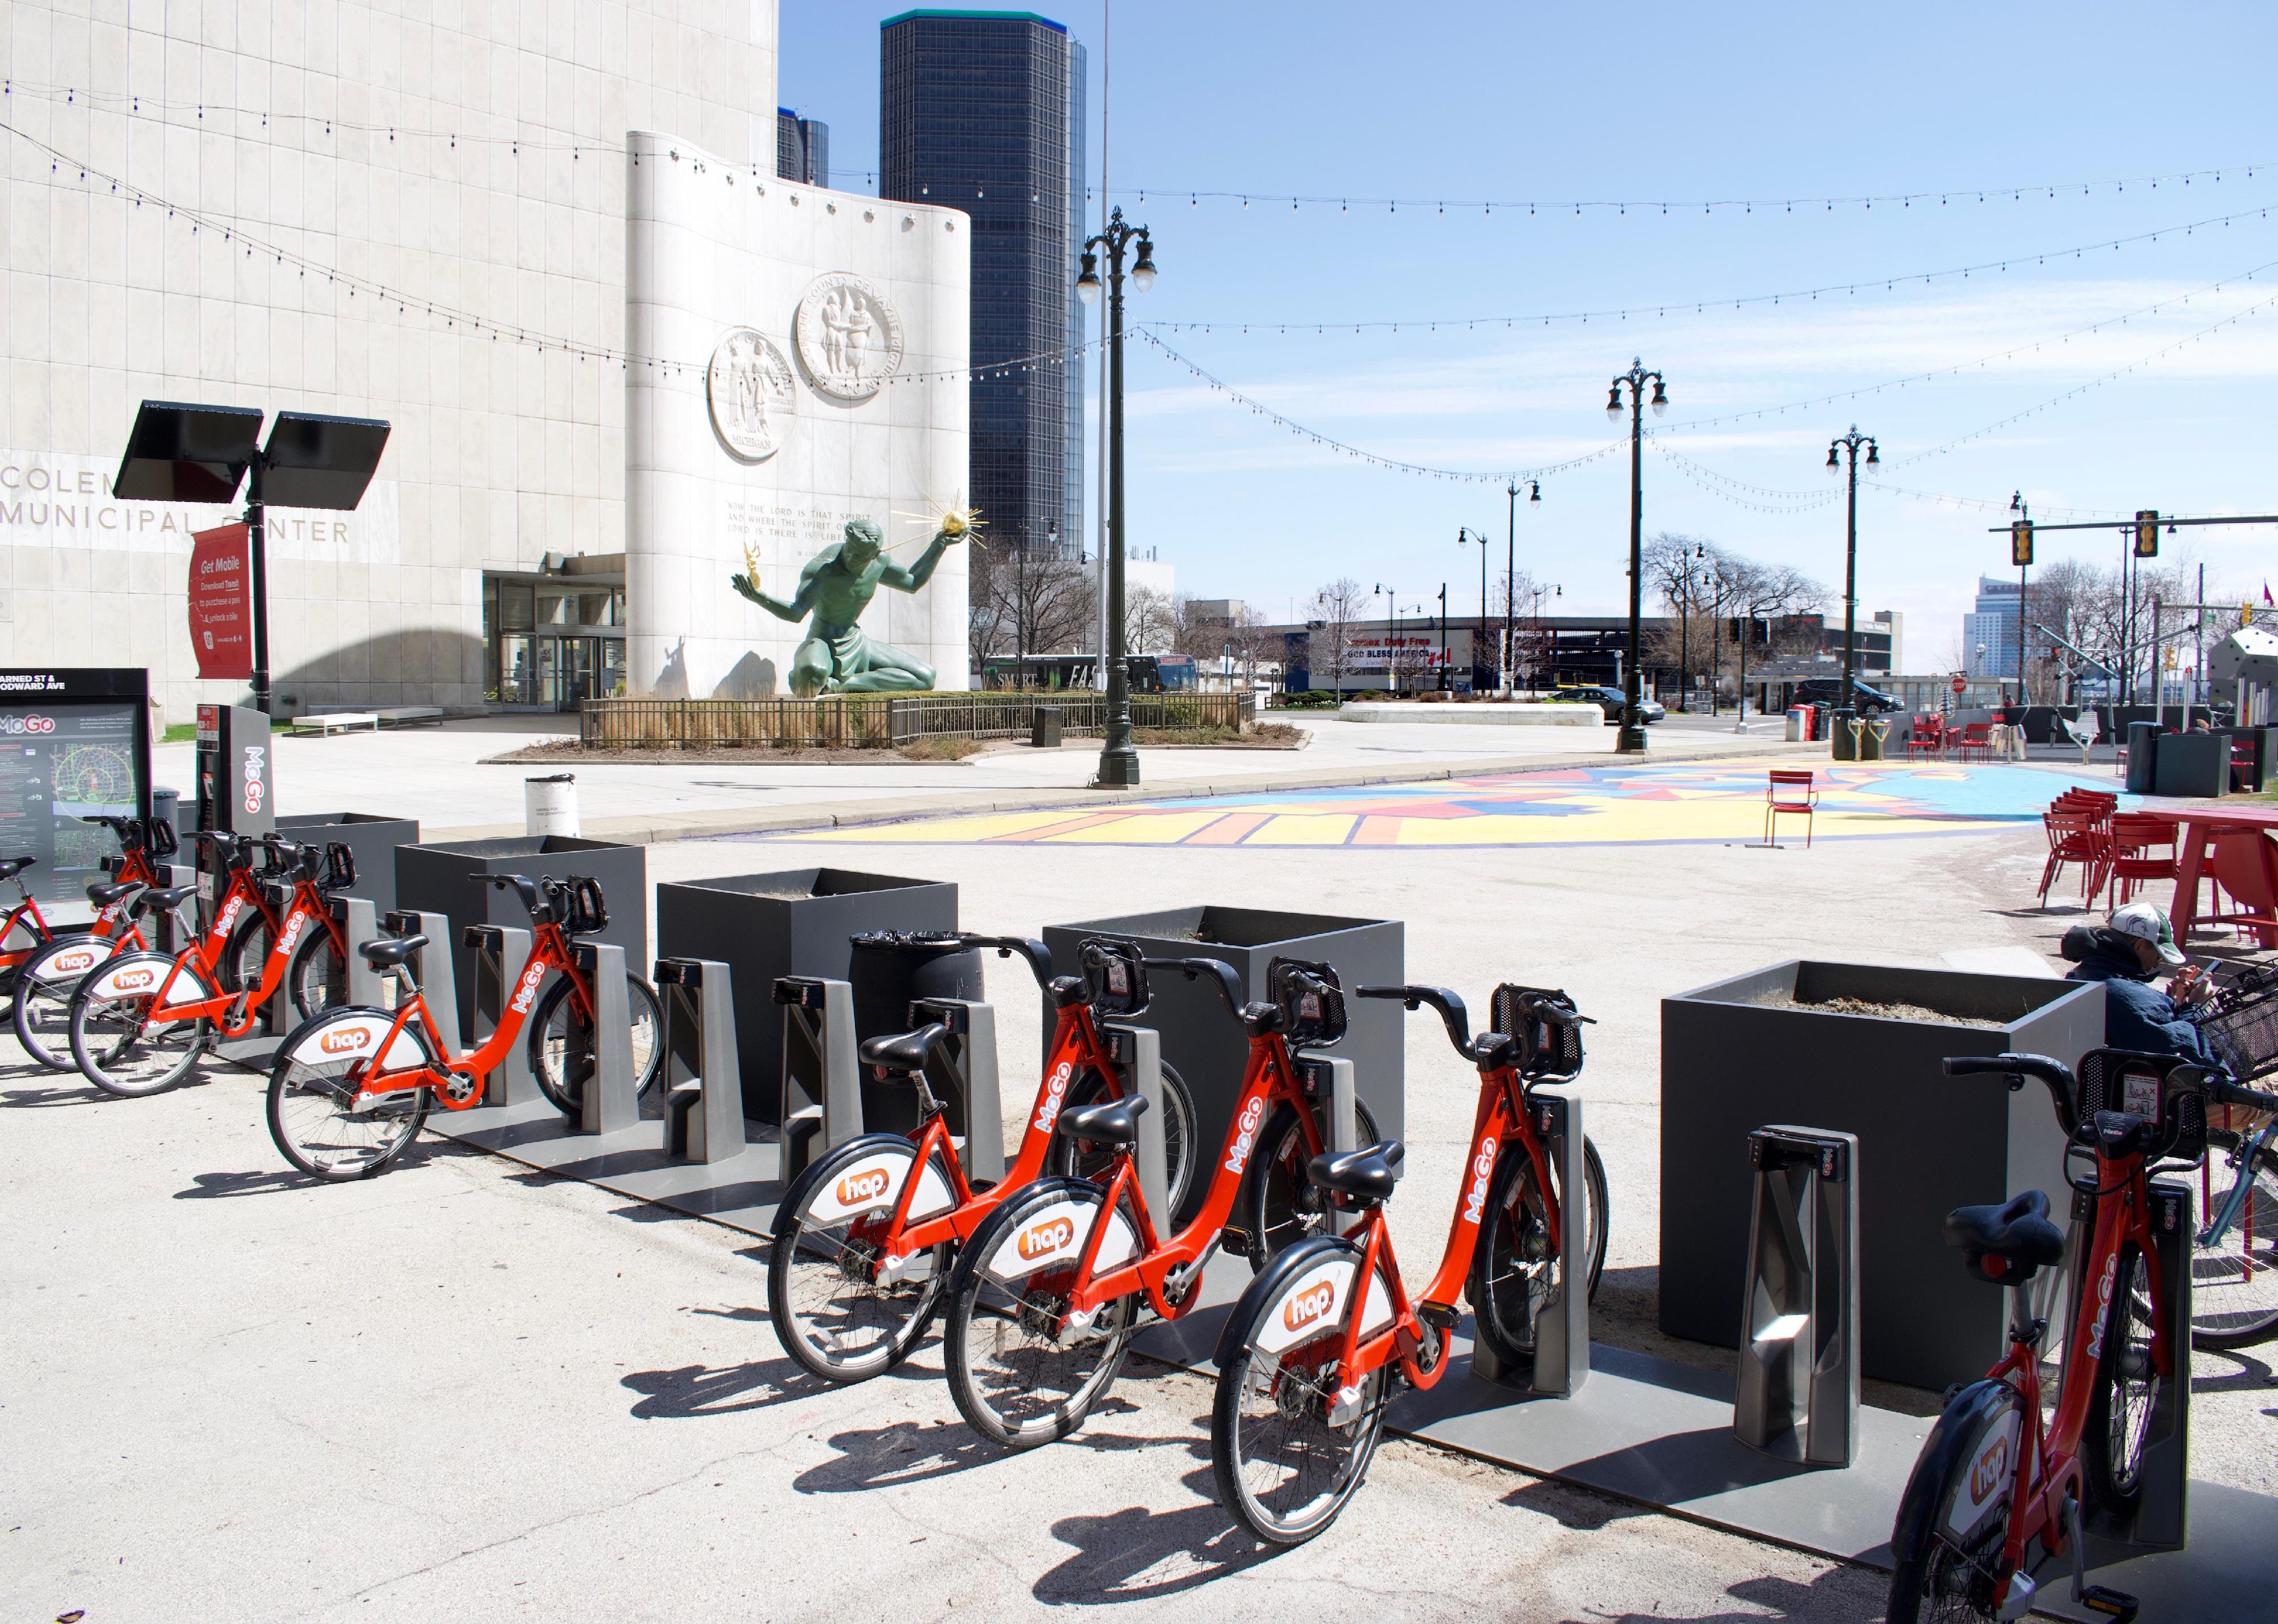  Detroit's "Spirit of Detroit" Plaza at midday with MoGo Bike Rentals